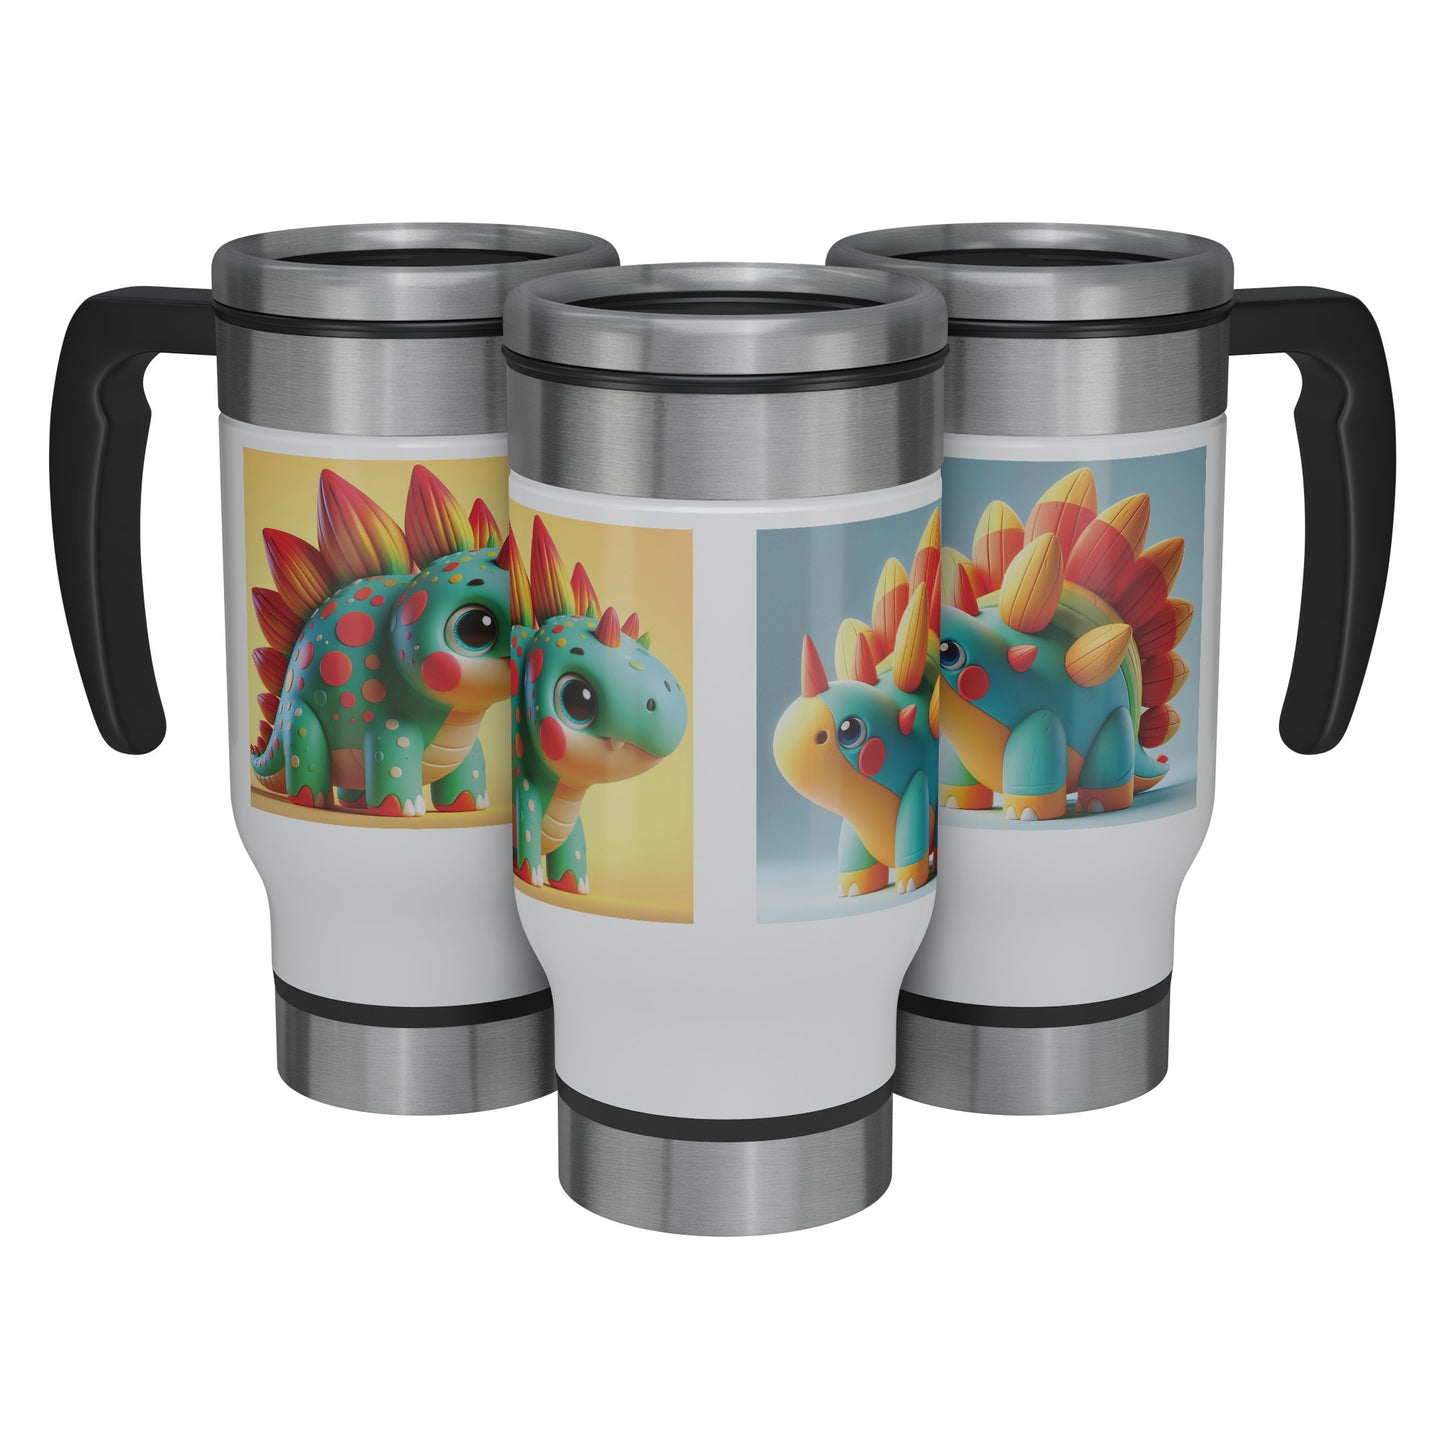 Adorable & Charming Dinosaurs - Travel Mug - Dinosaur #15